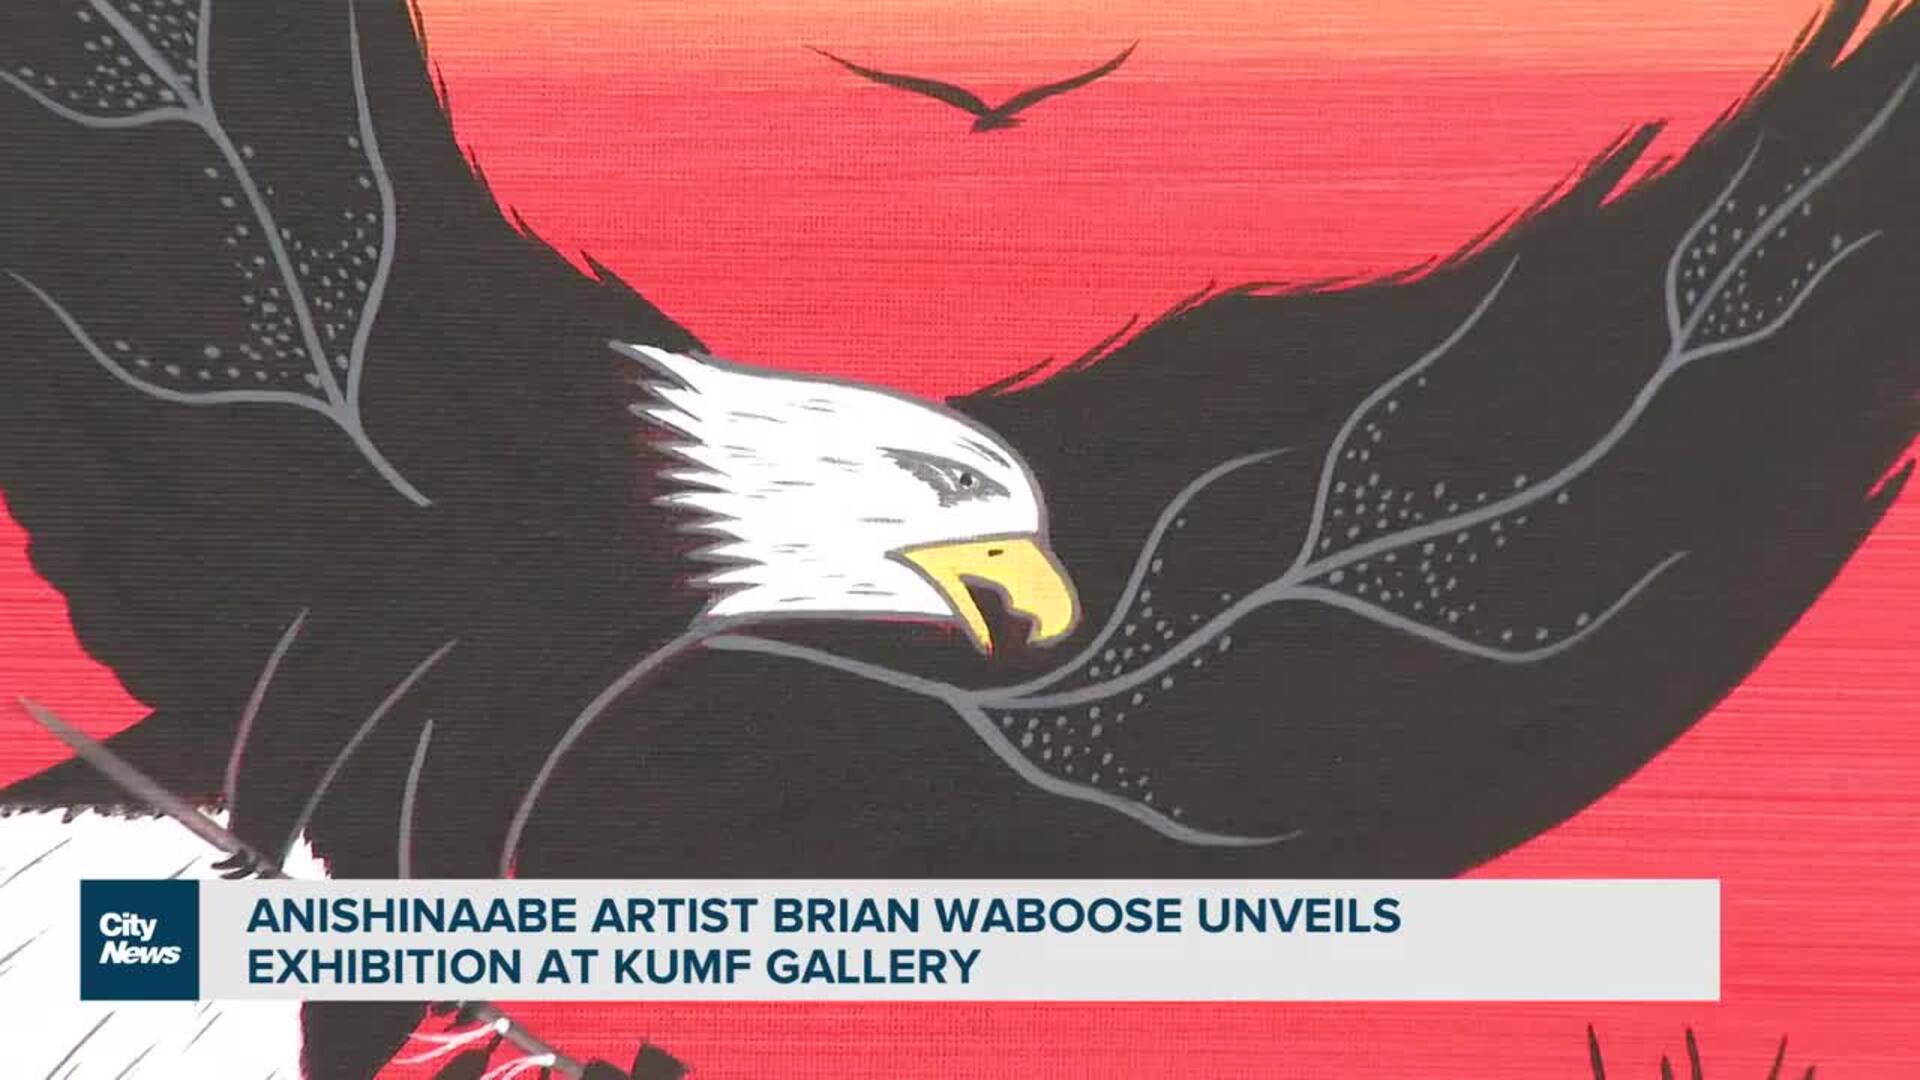 Anishinaabe artist Brian Waboose unveils new exhibition at KUMF Gallery